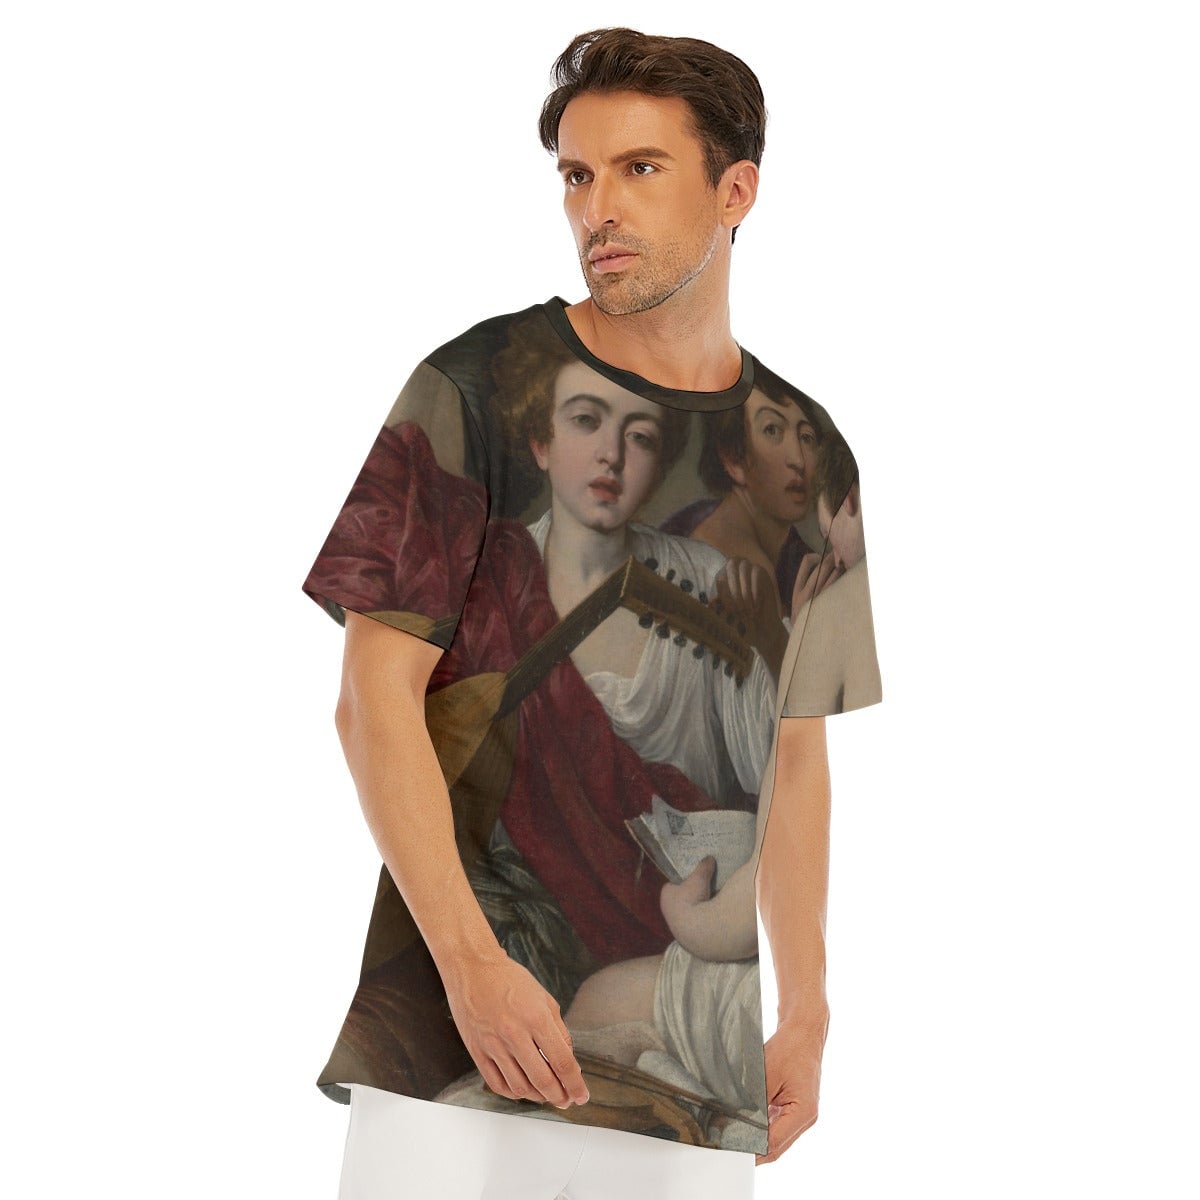 The Musicians by Caravaggio Art Baroque T-Shirt